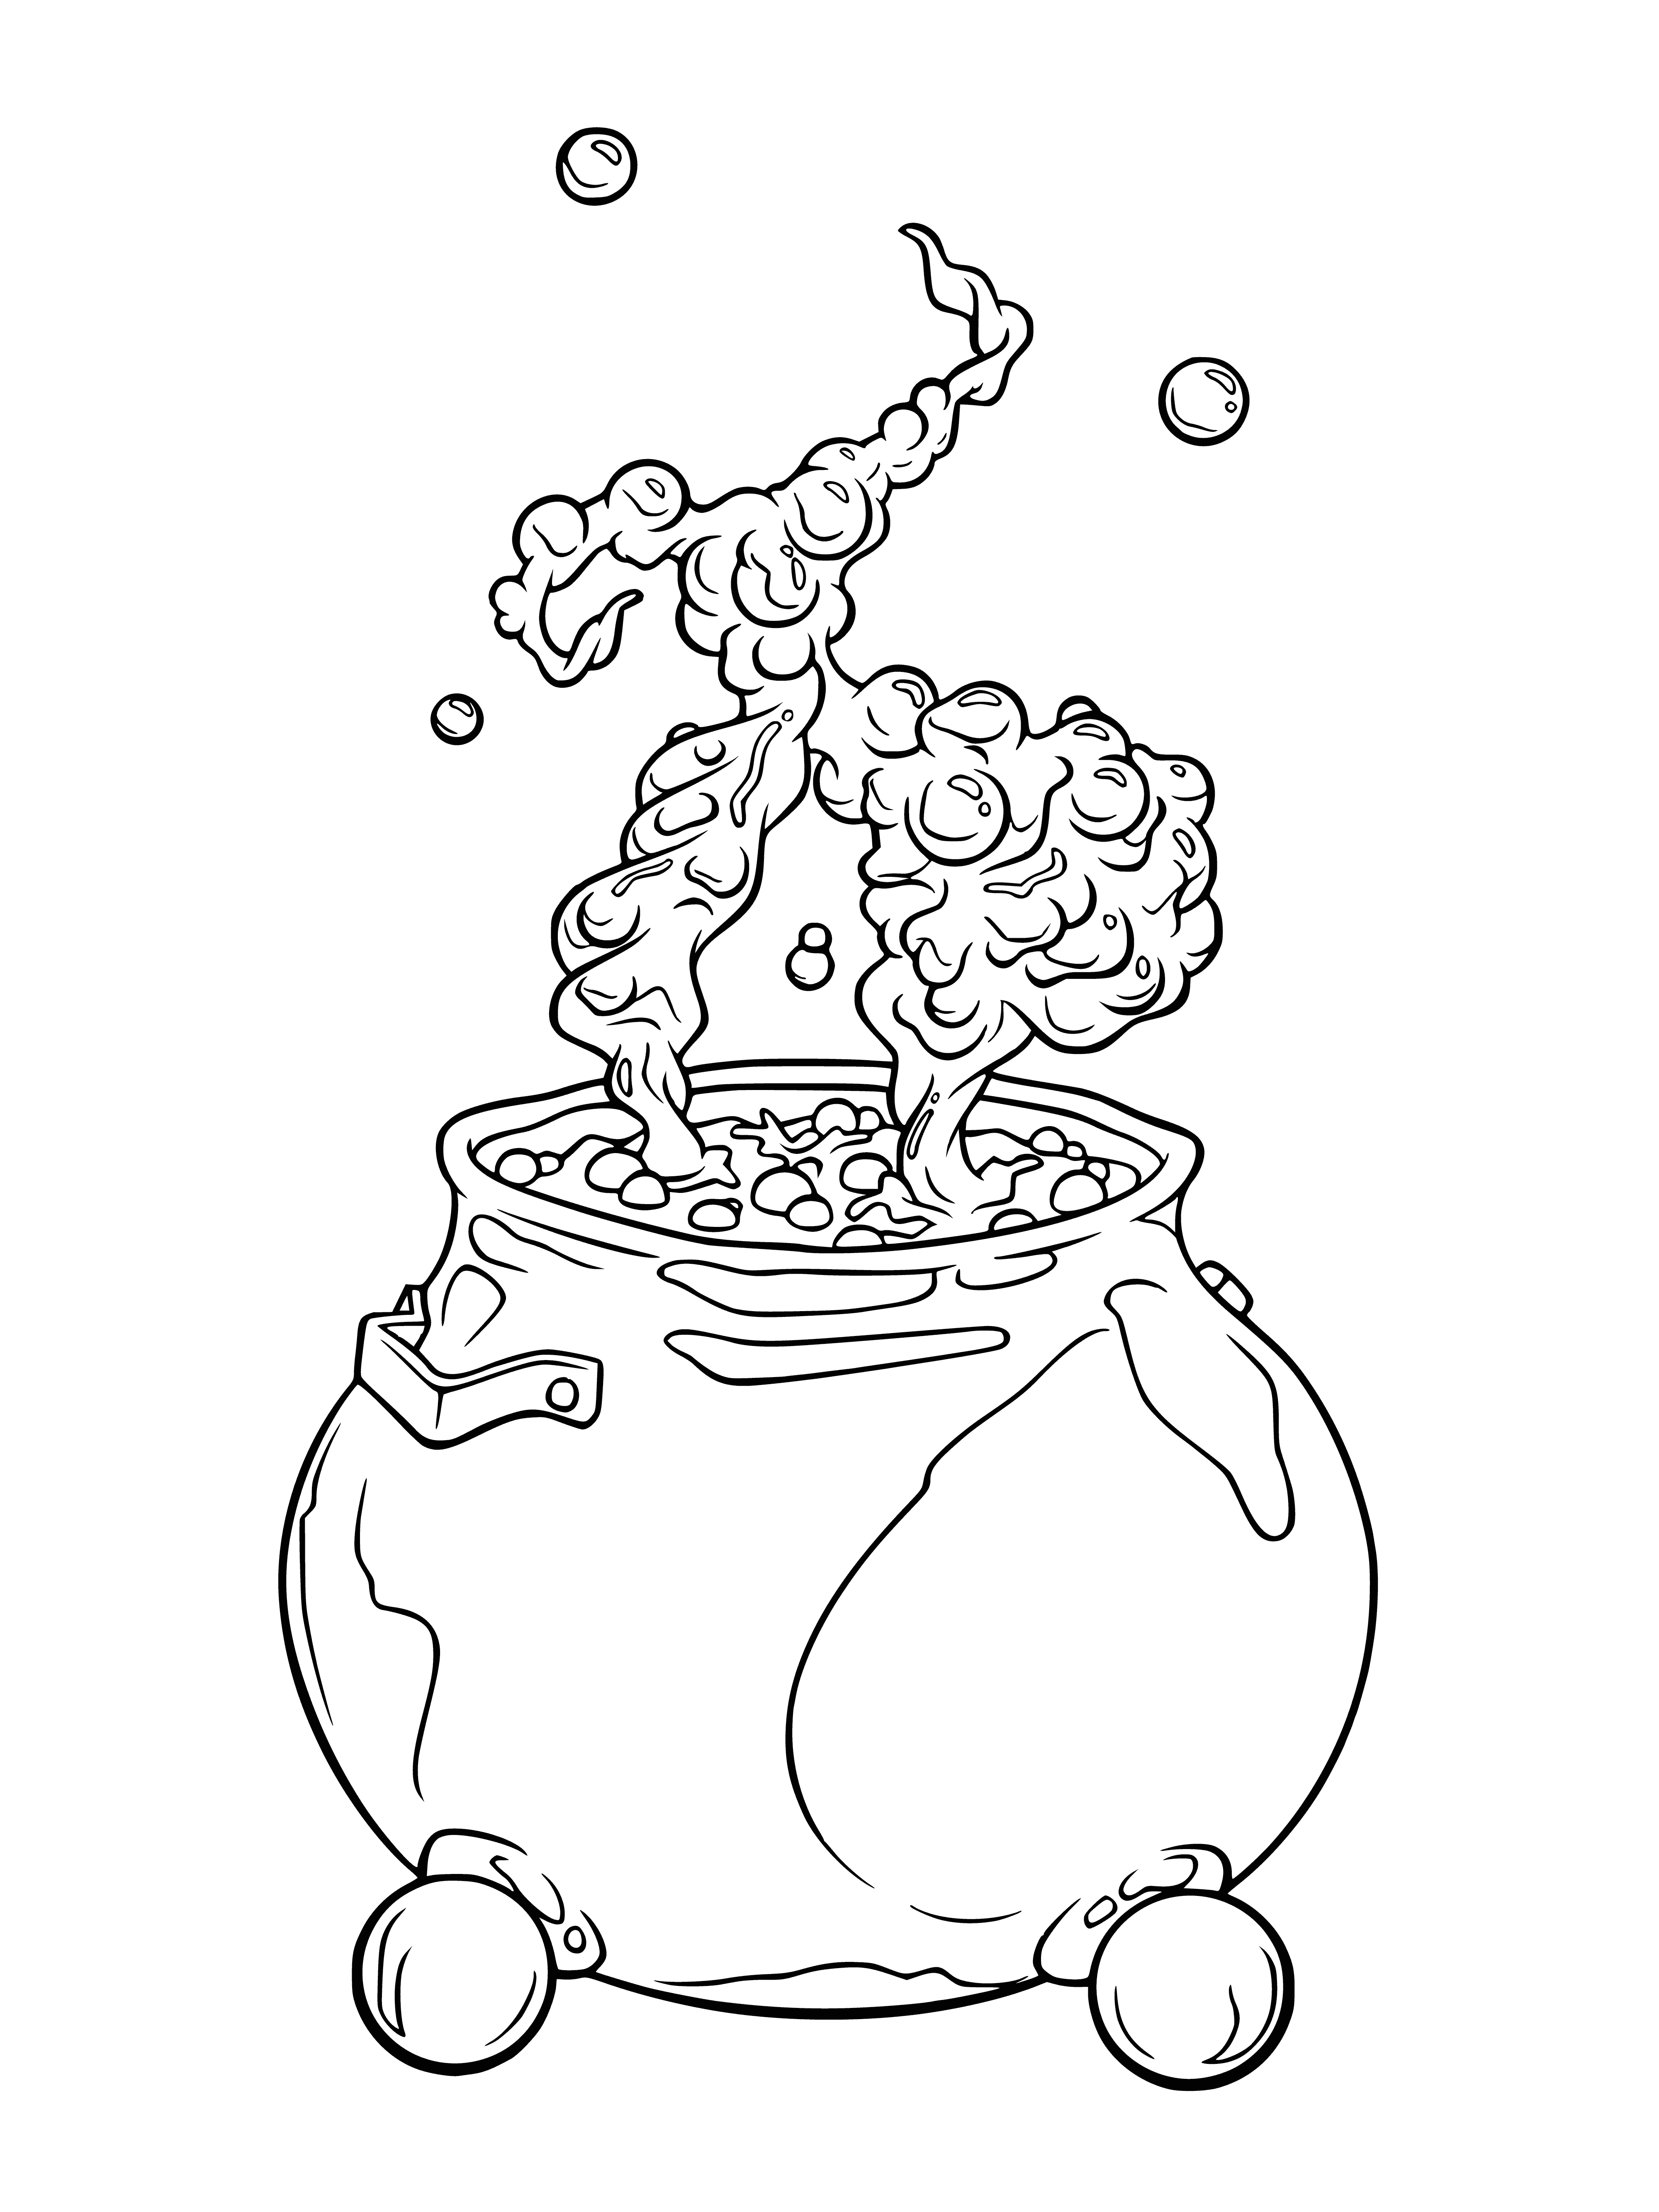 Potion cauldron coloring page